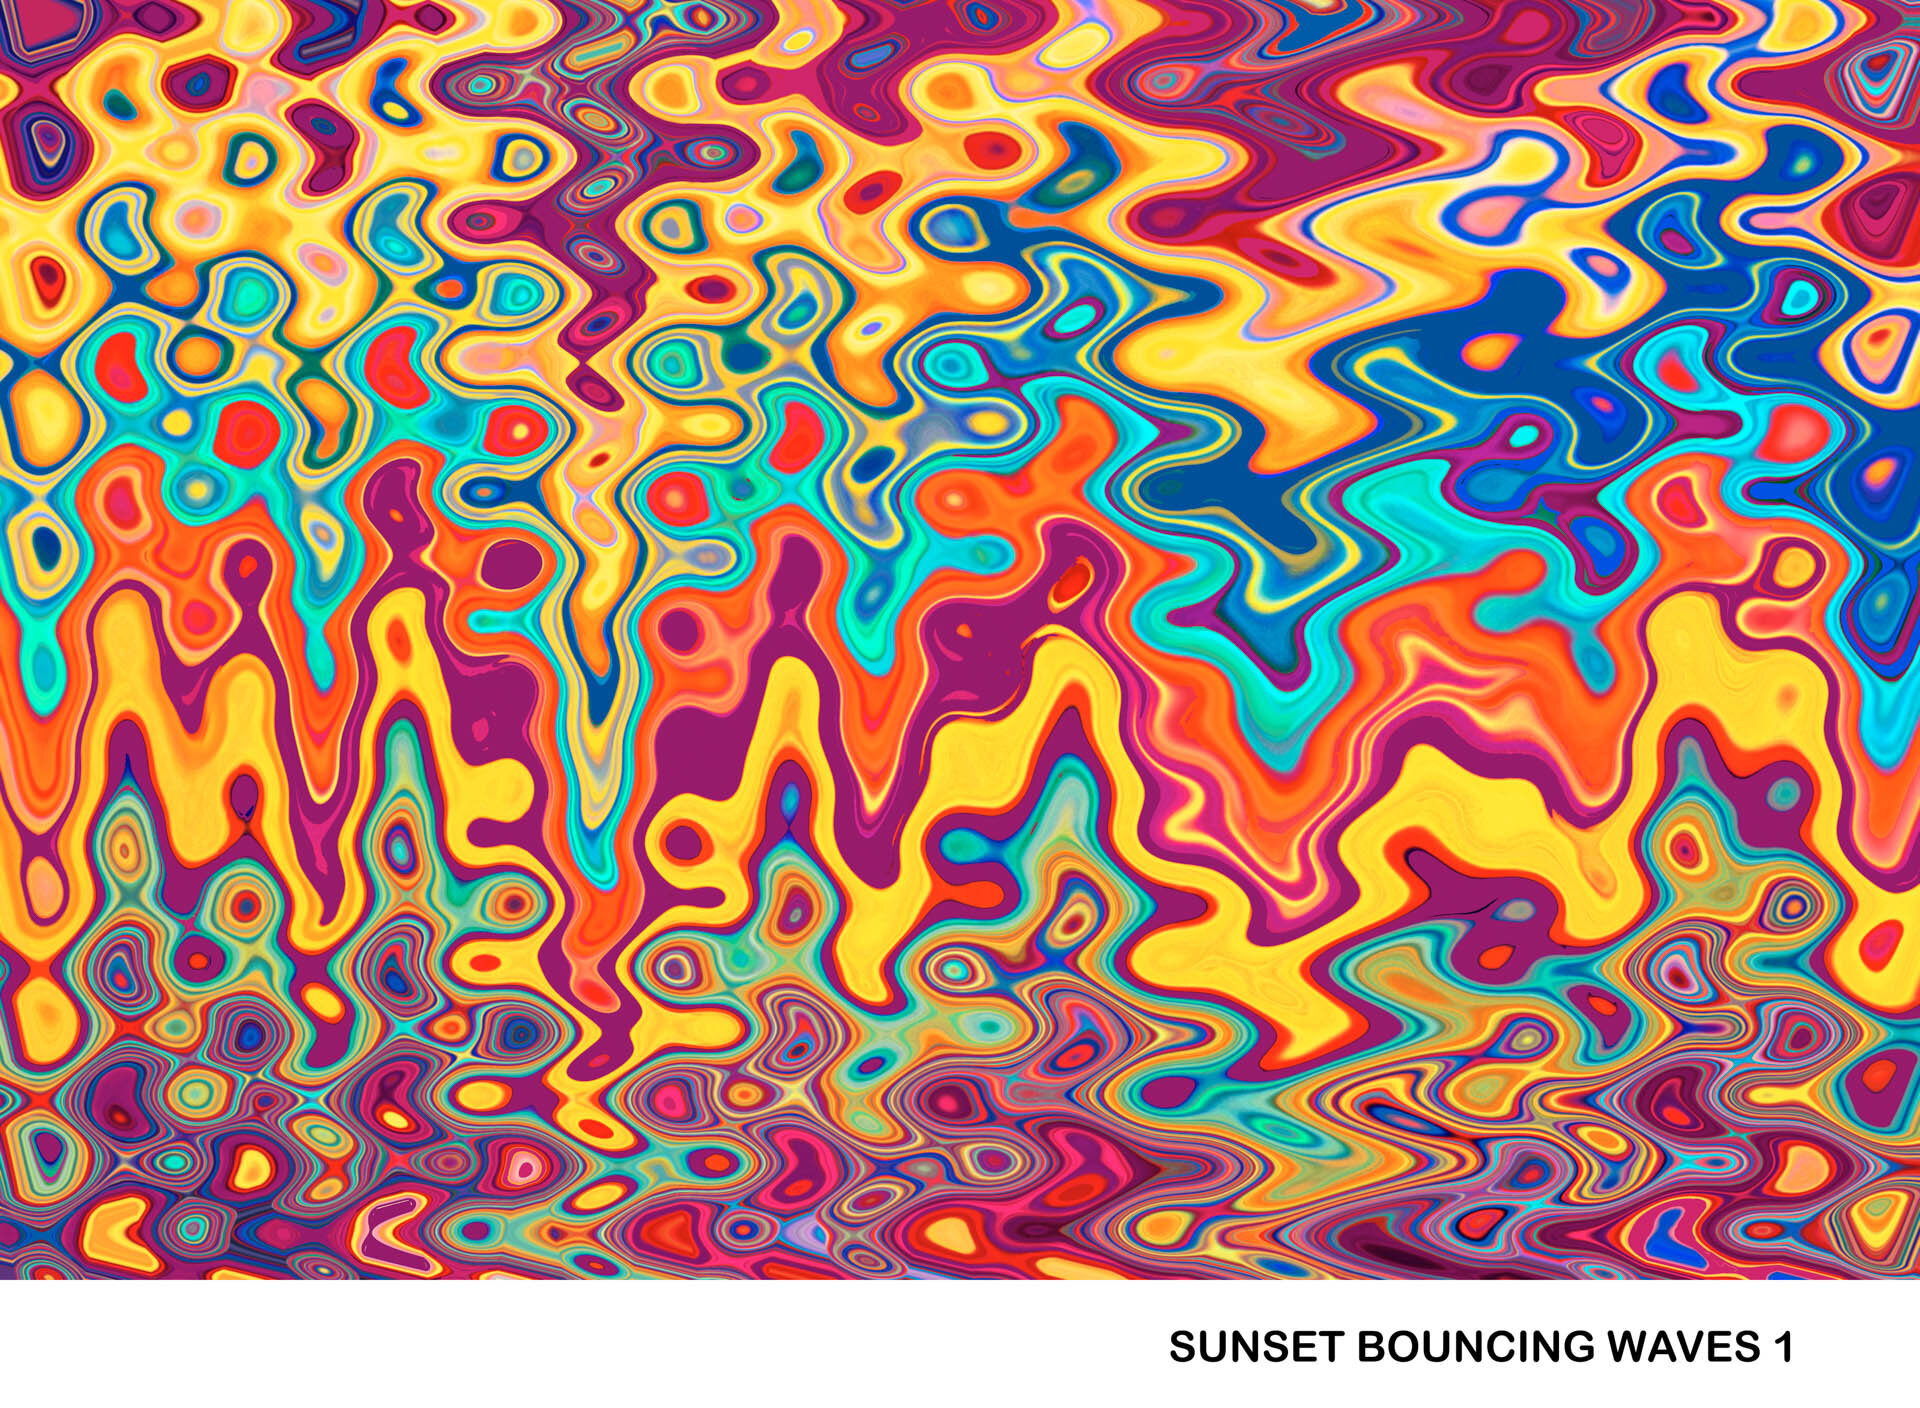 Sunset Bouncing Waves 1 Titled.jpg